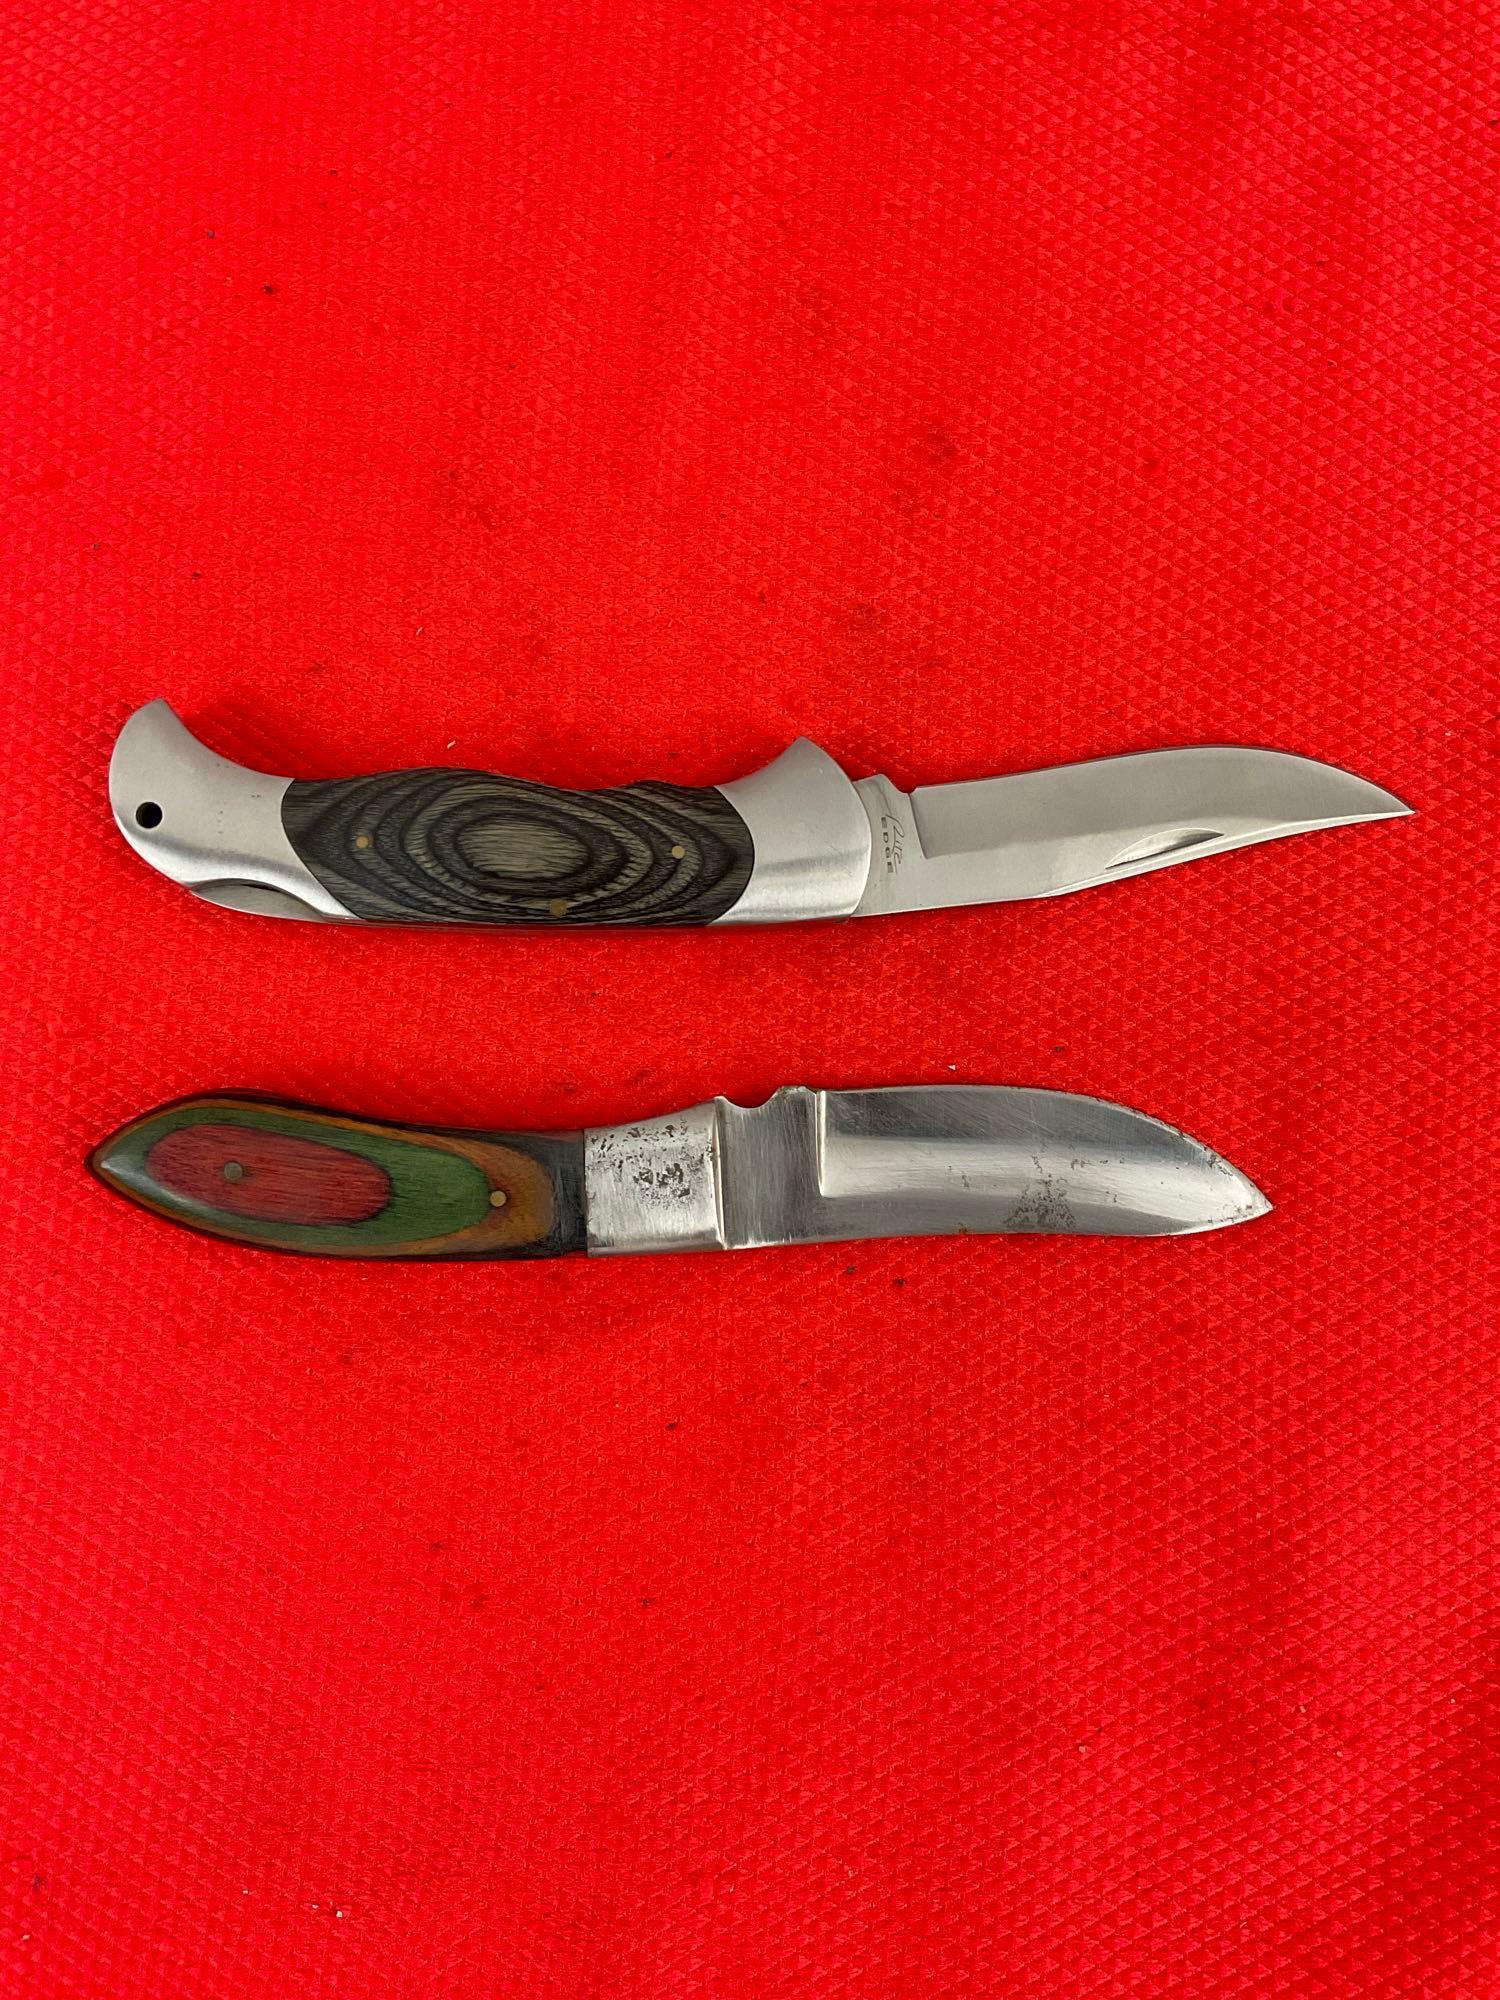 2 pcs Modern Steel Hunting Knives w/ Sheathes Assortment. 1x Rite Edge, 1x Unknown. See pics.